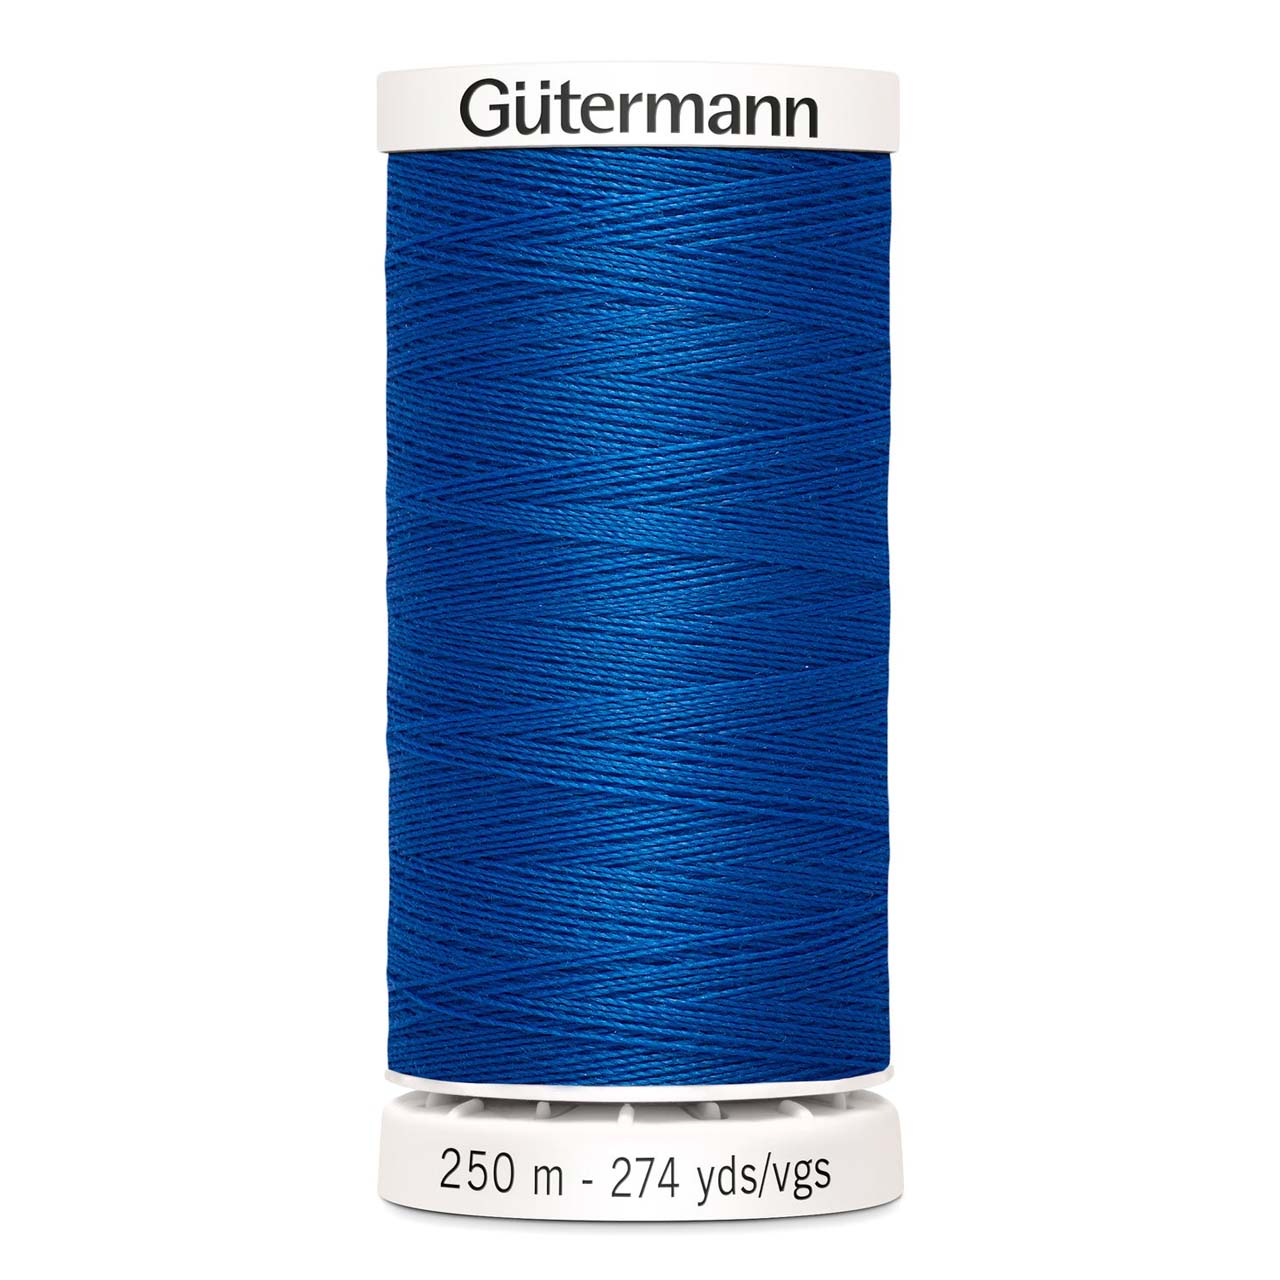 Gutermann thread 322 sewing thread 250 metres